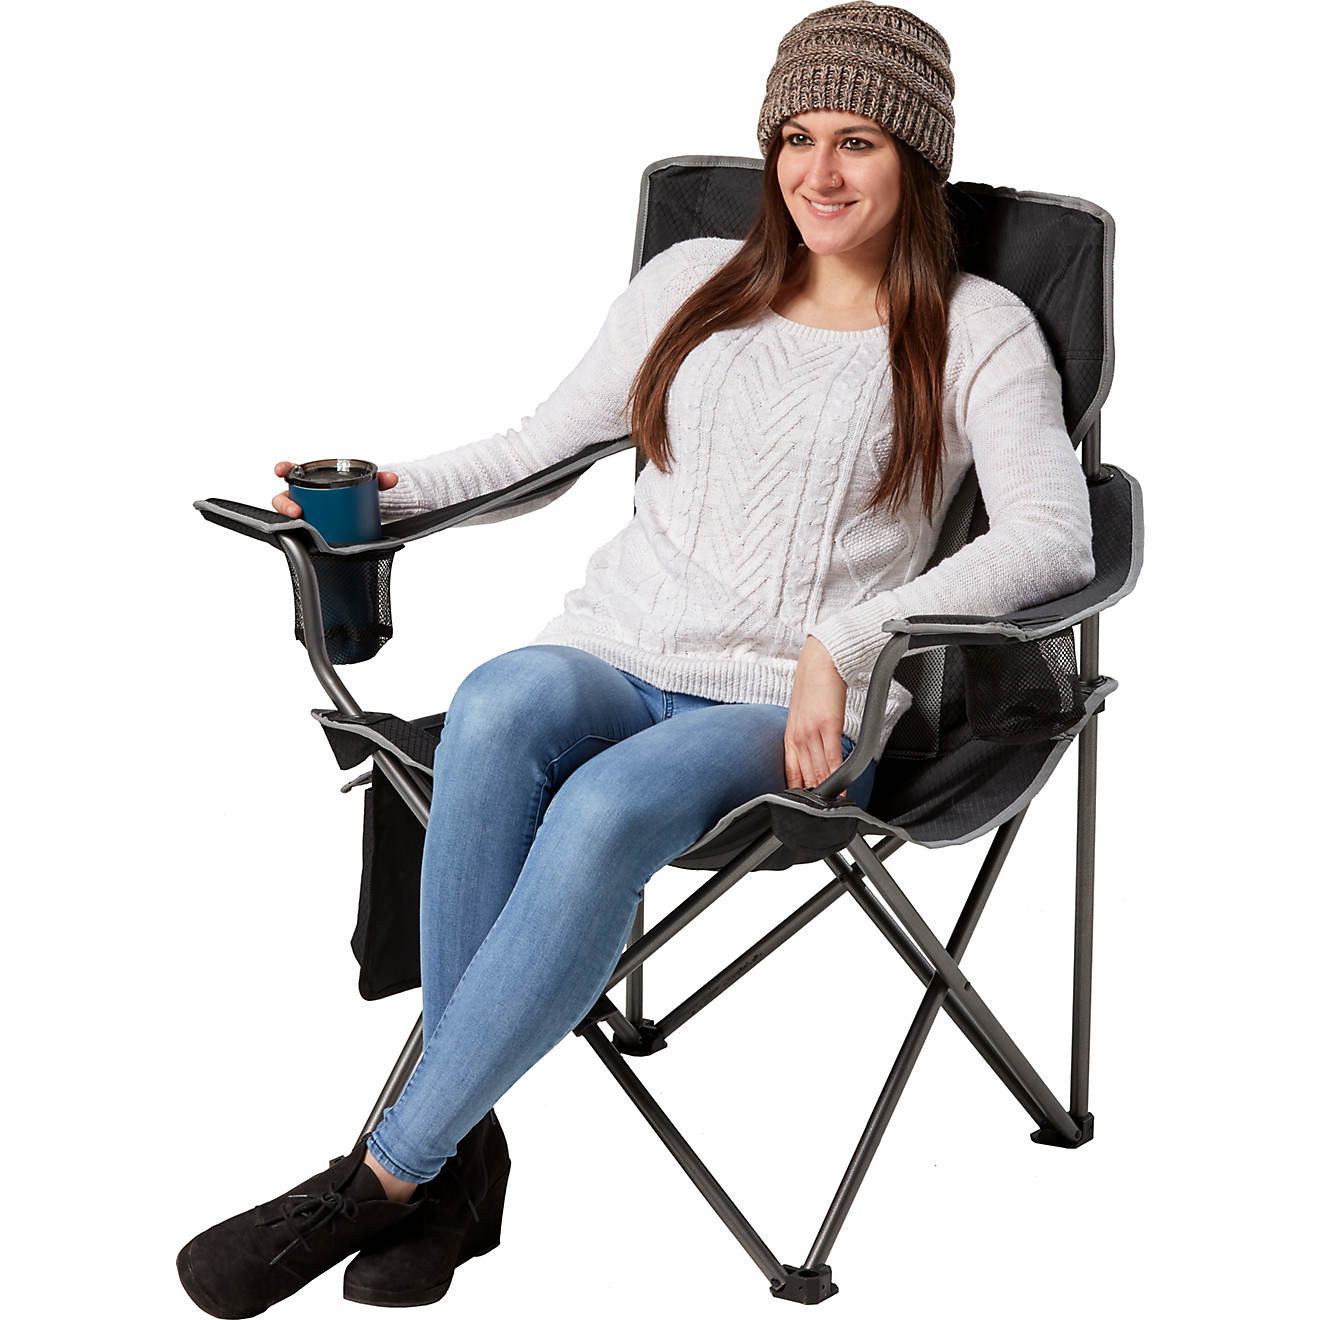 Magellan Outdoors Heated Quad Folding Chair Academy